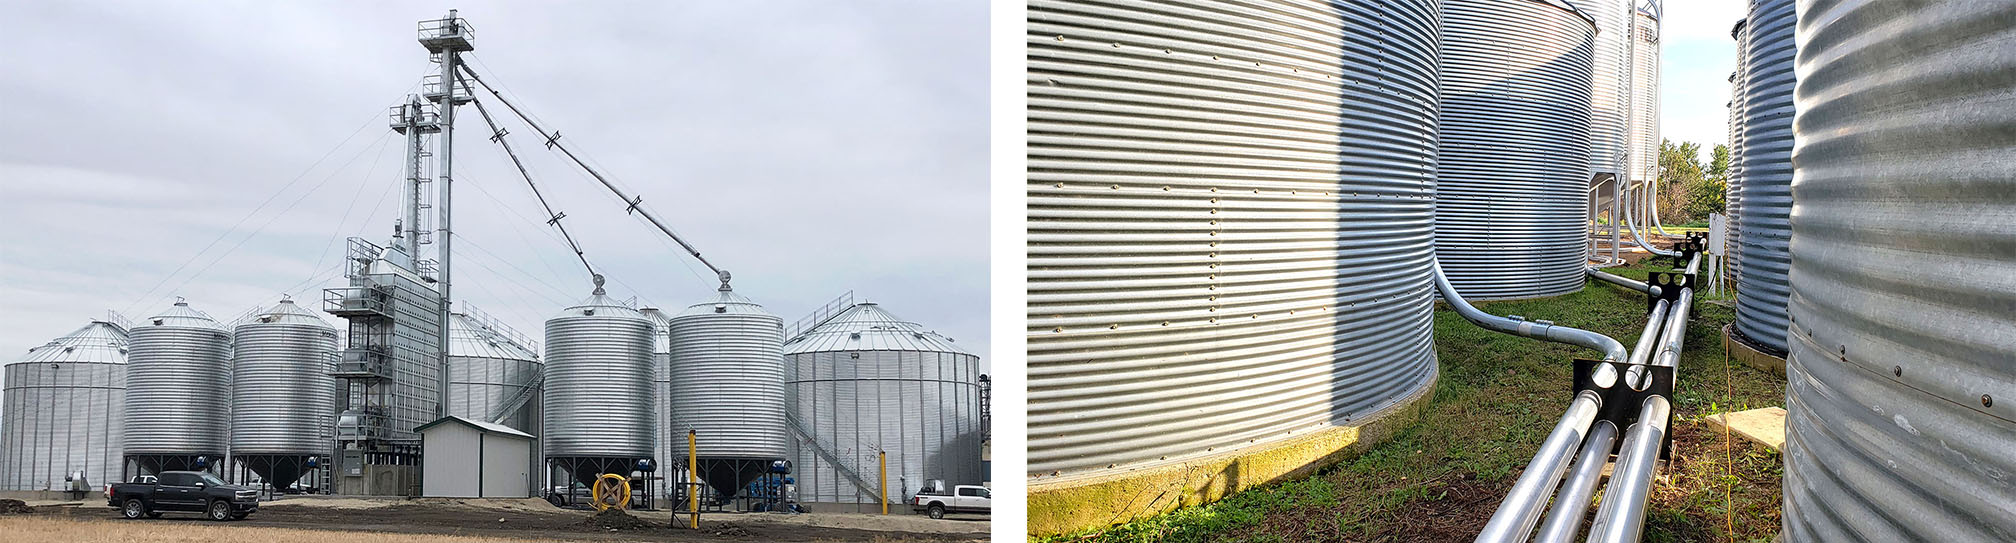 Bin Site with NECO Grain Dryer & Bucket Elevators / Walinga Pipe, Distributor